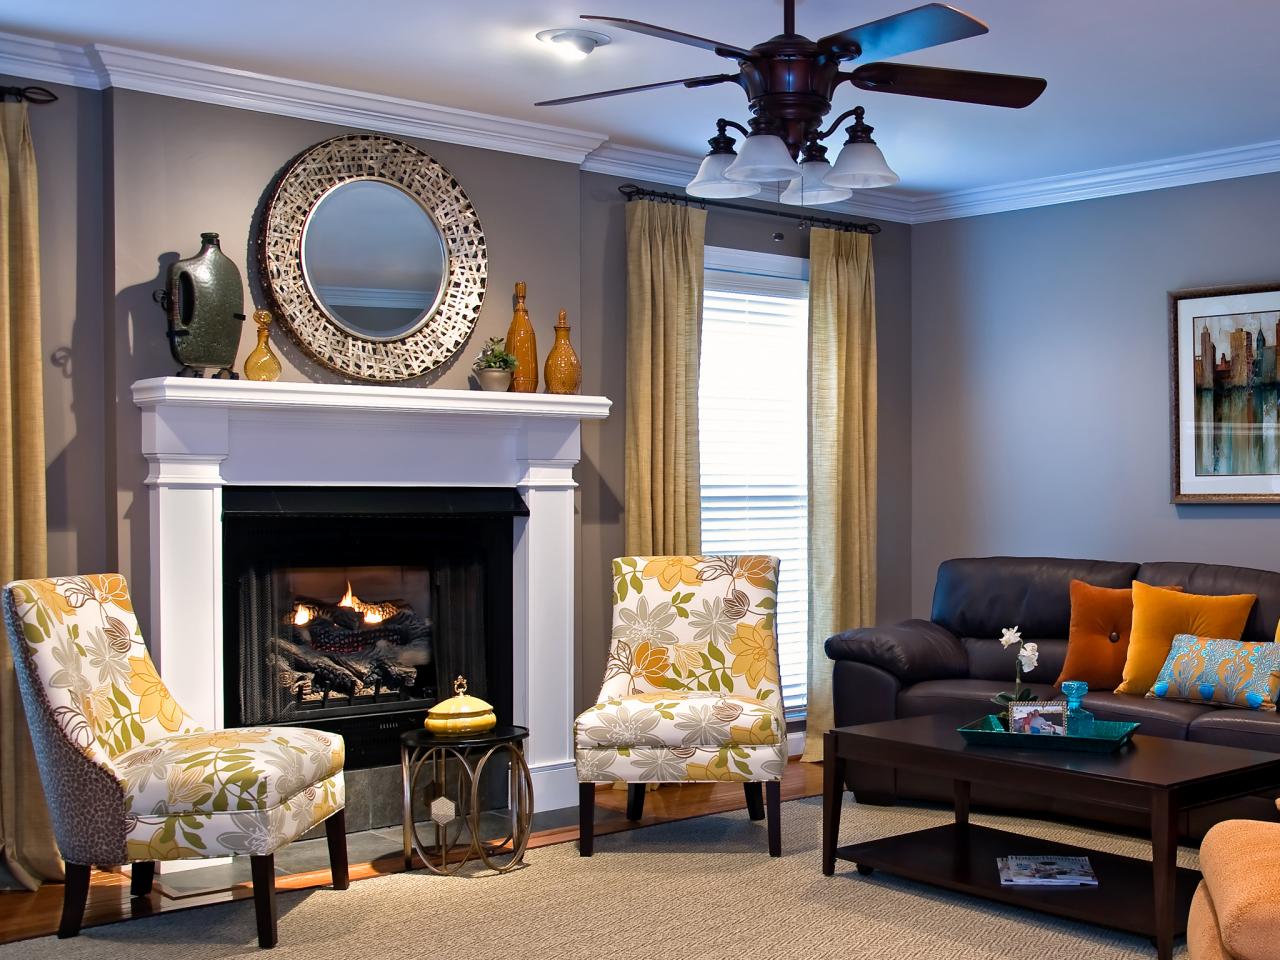 Living Room Design Is Elegant Balanced